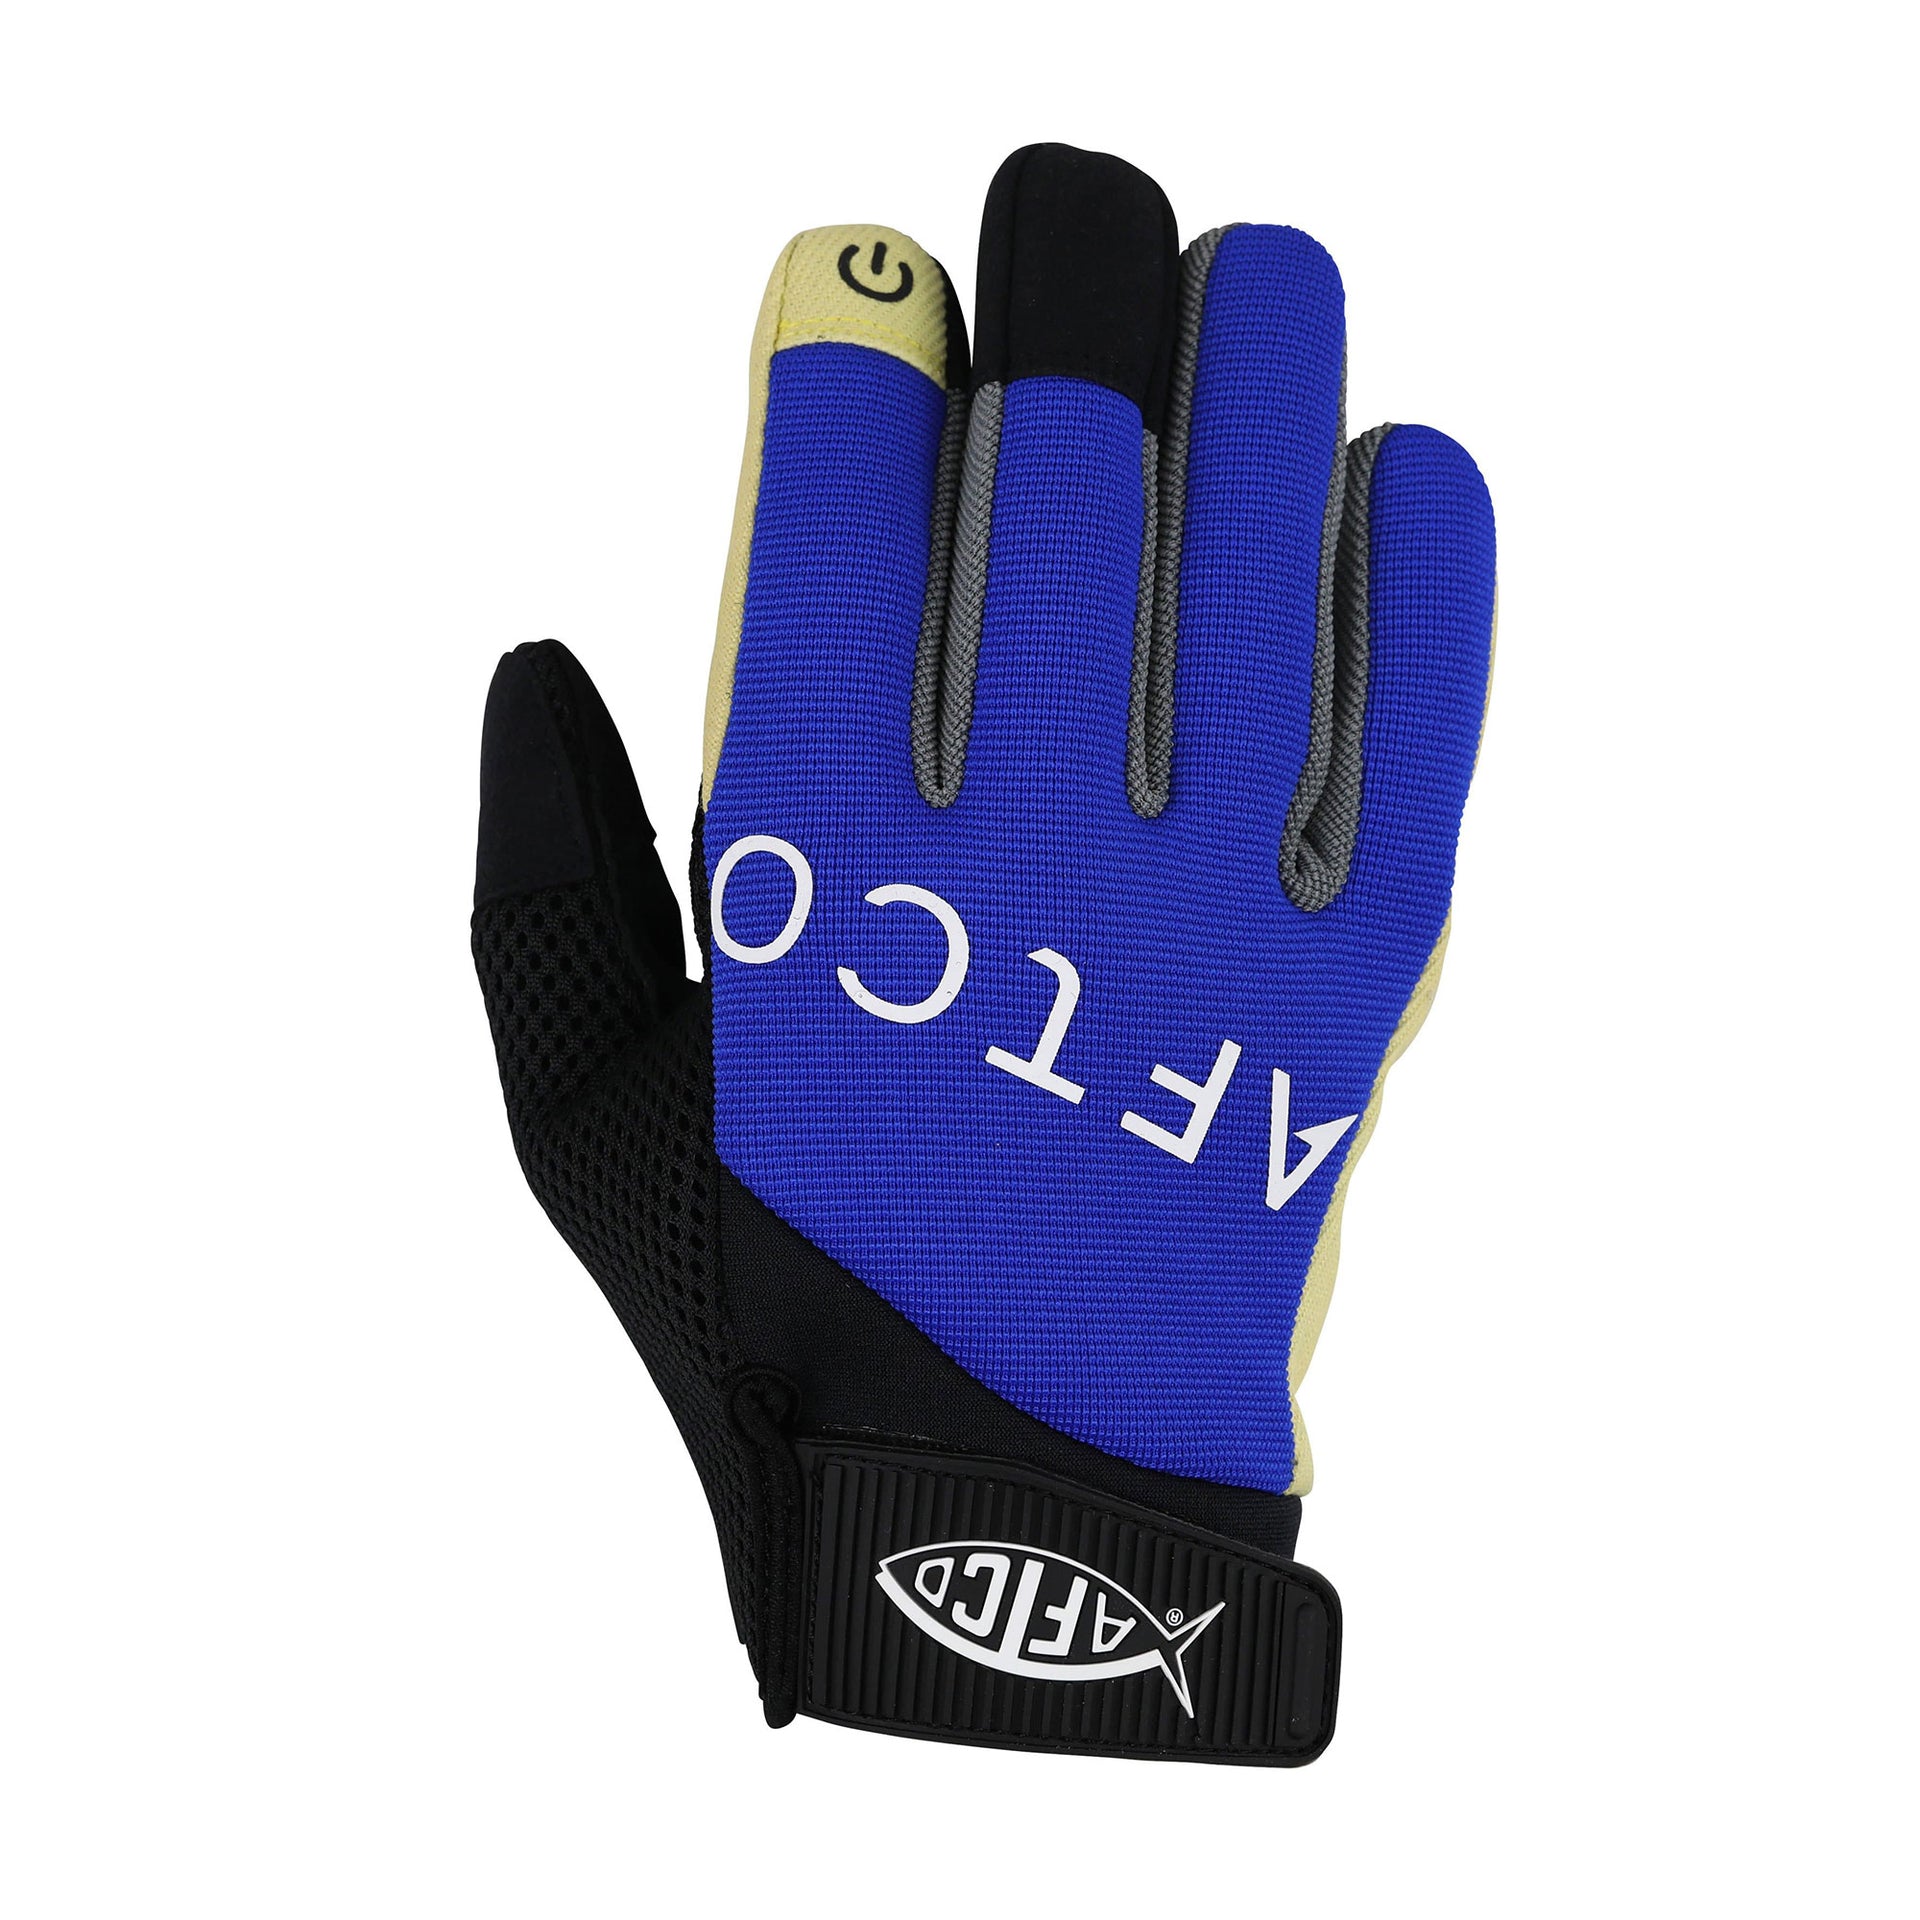 Floso Mens Neoprene Premium Angling/Fishing Gloves